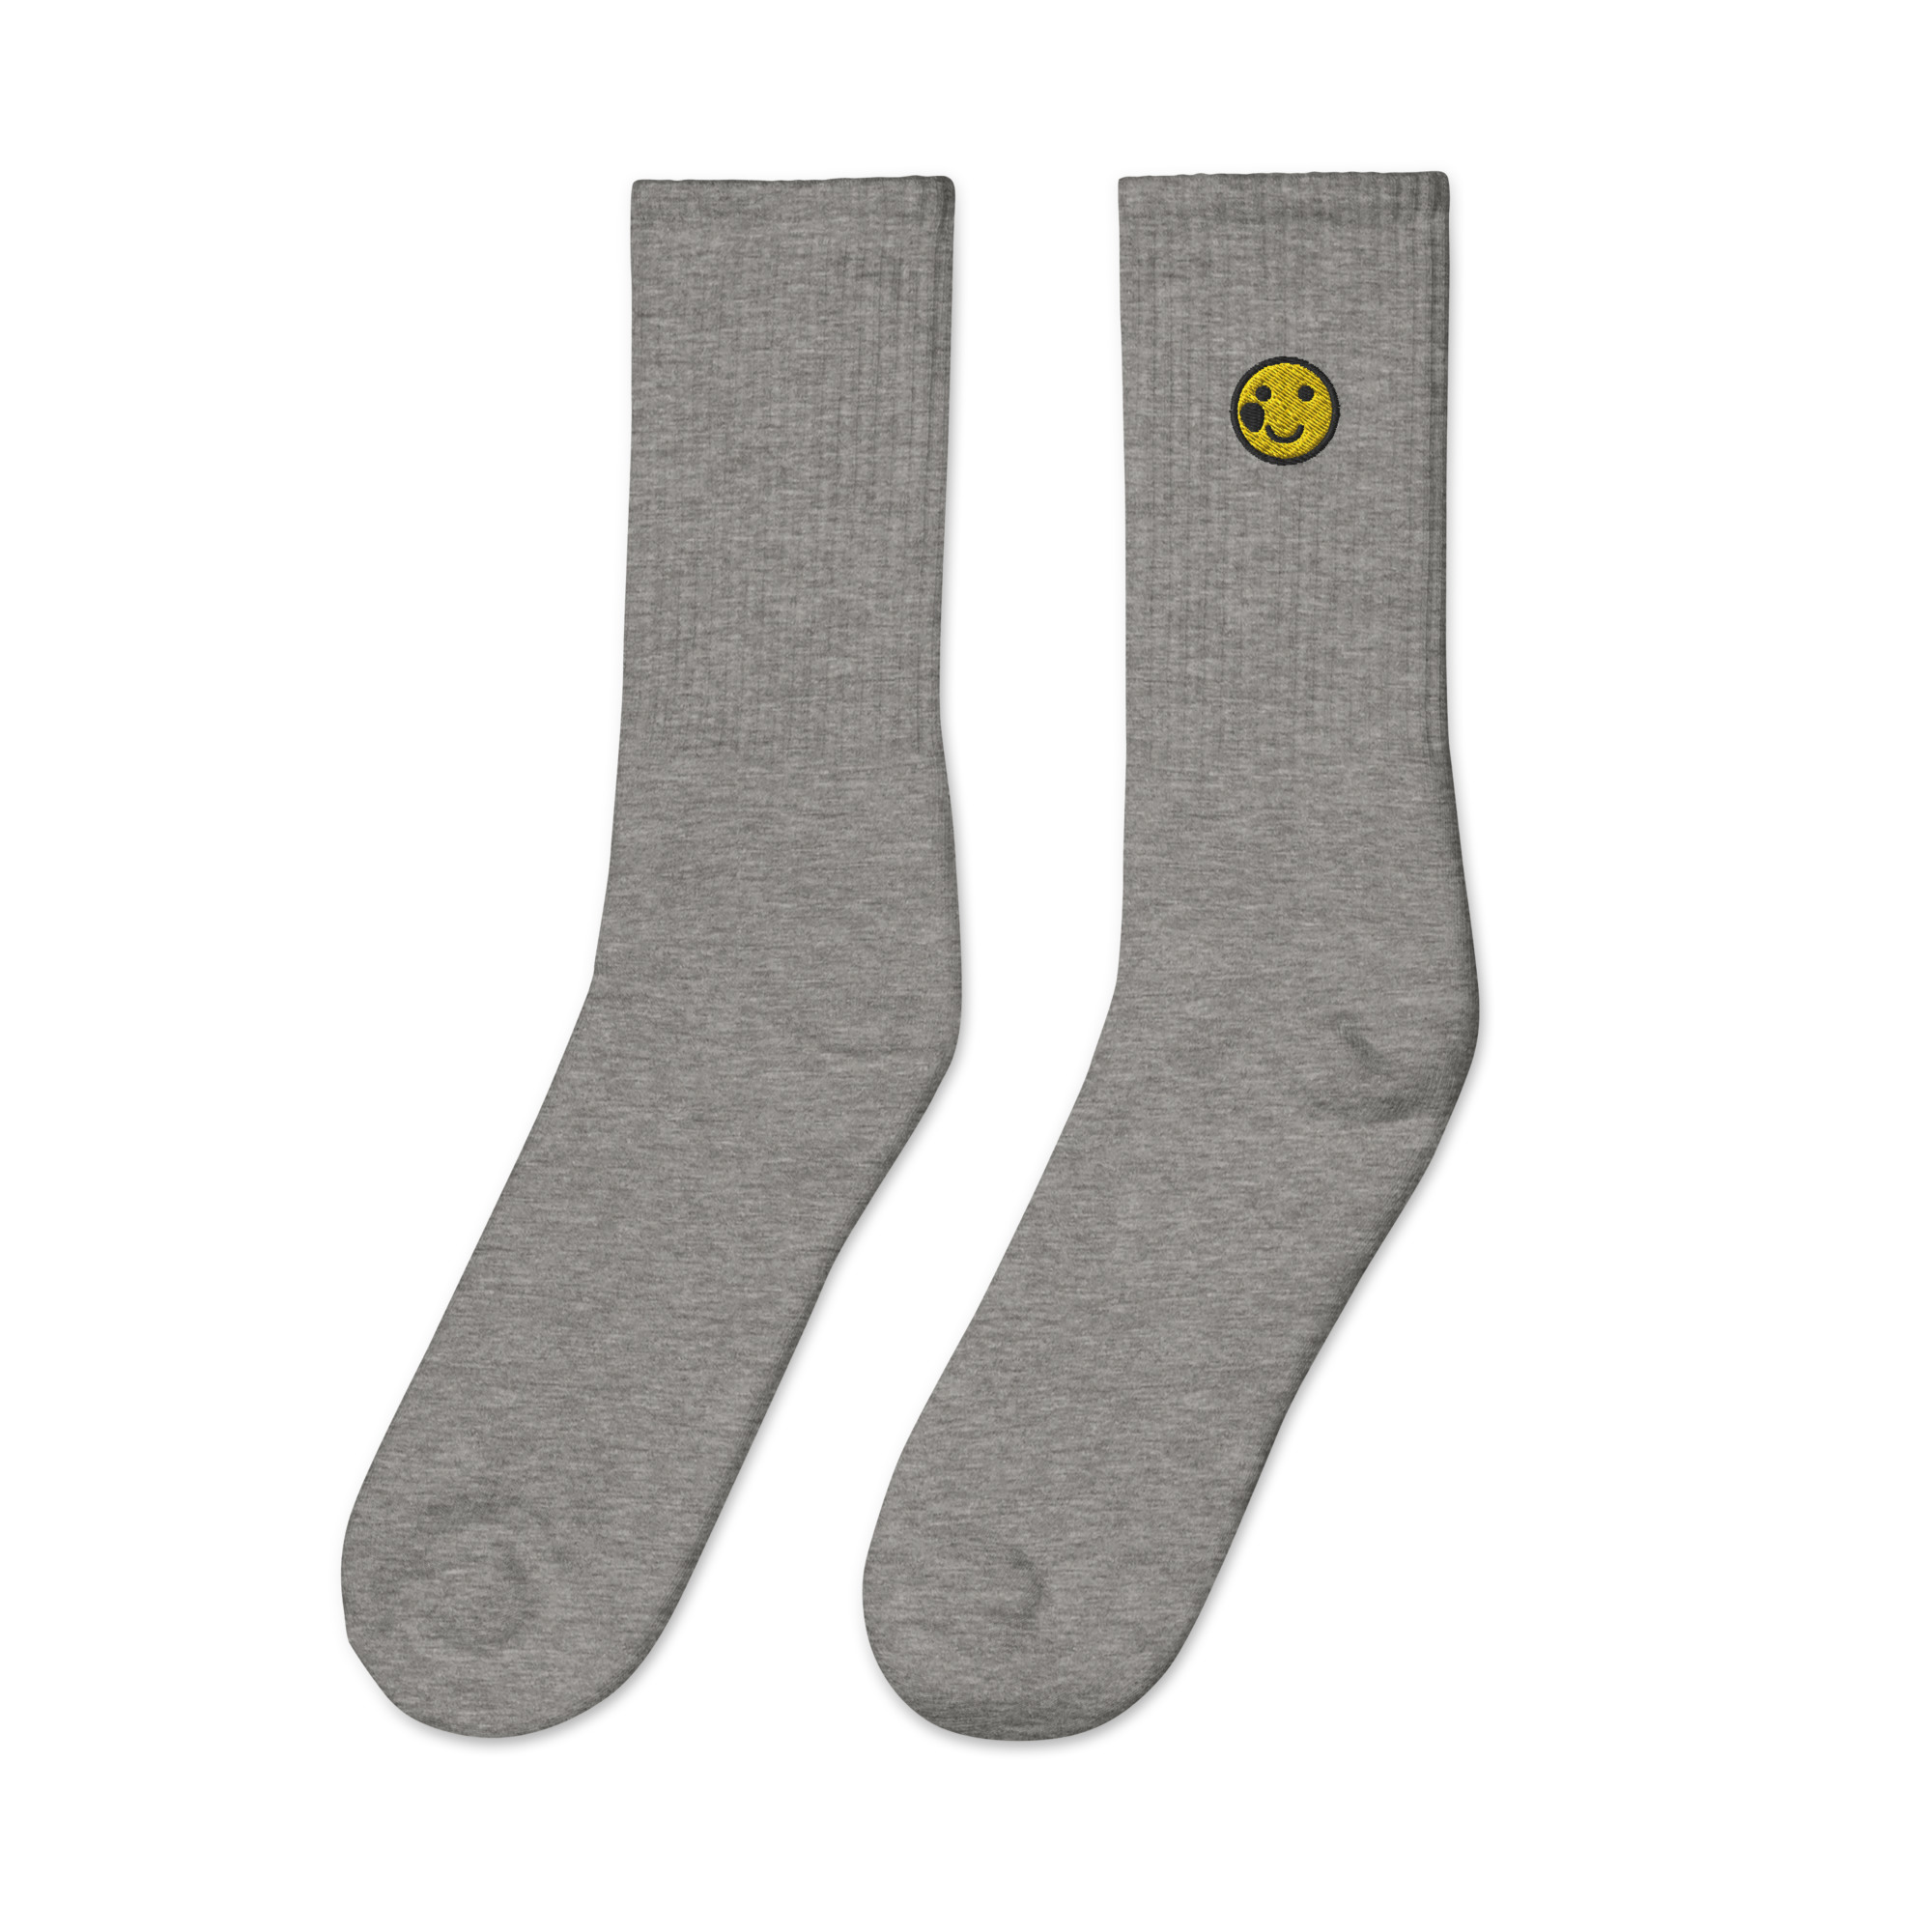 embroidered-crew-socks-heather-grey-left-6542870cf1226.jpg